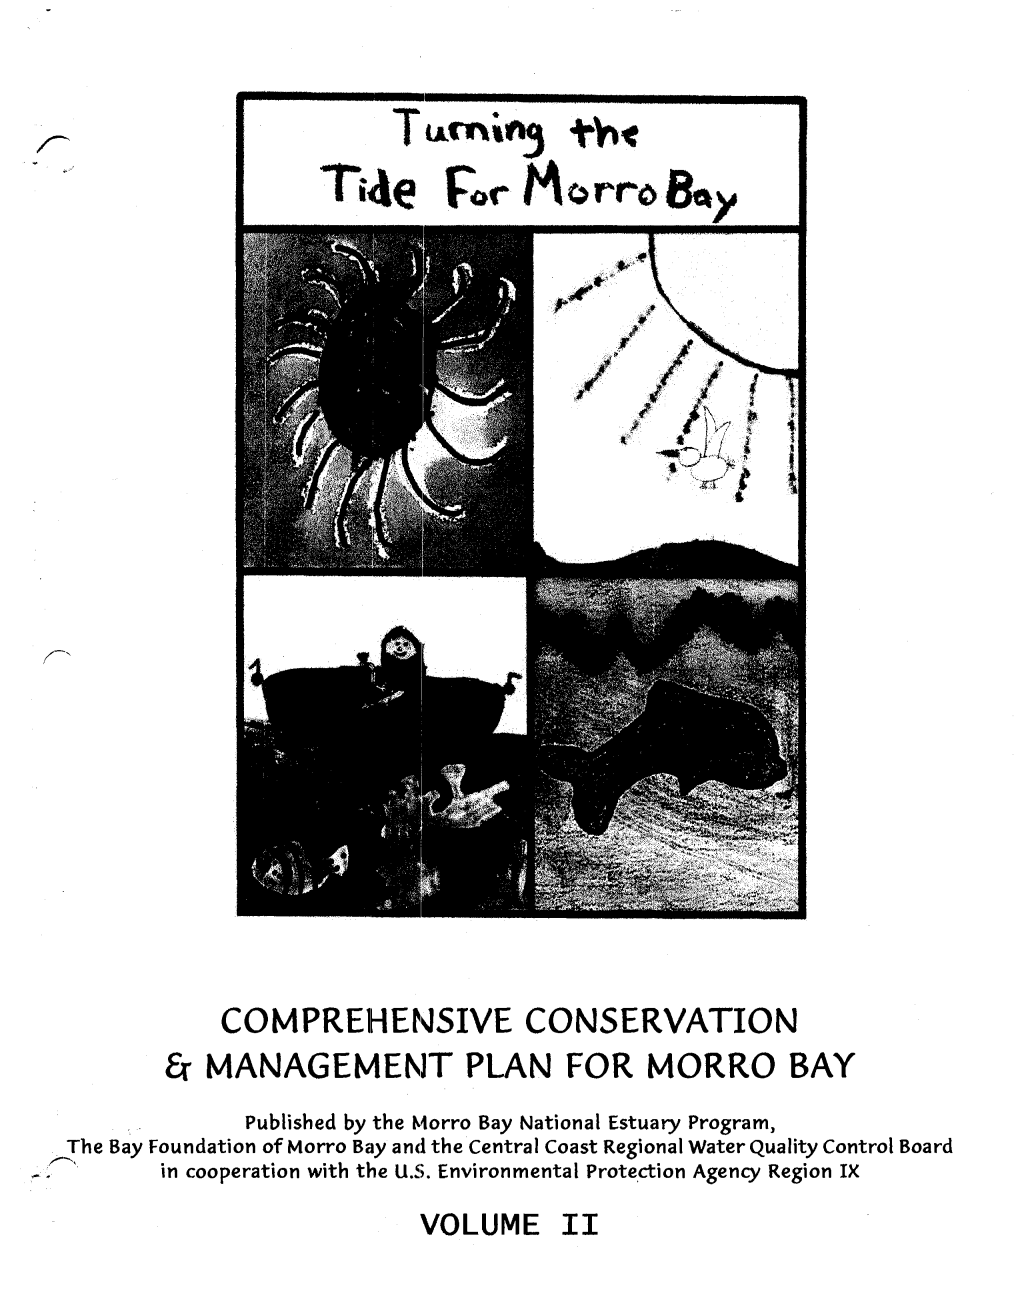 Management Plan for Morro Bay